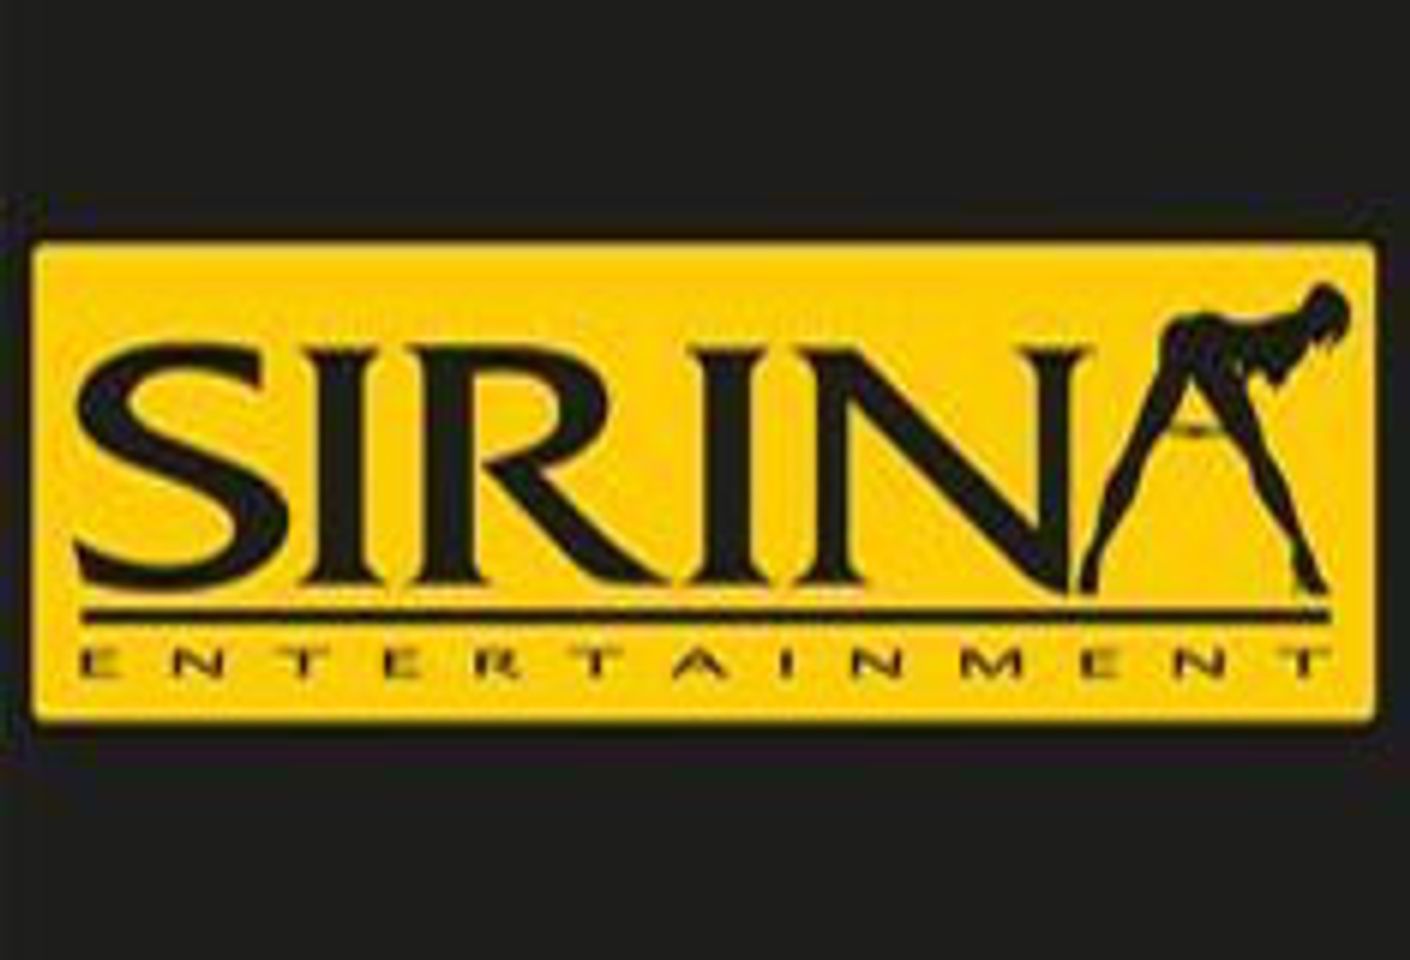 Sirina Entertainment Picks Mykonos Island For Latest Production Shoot